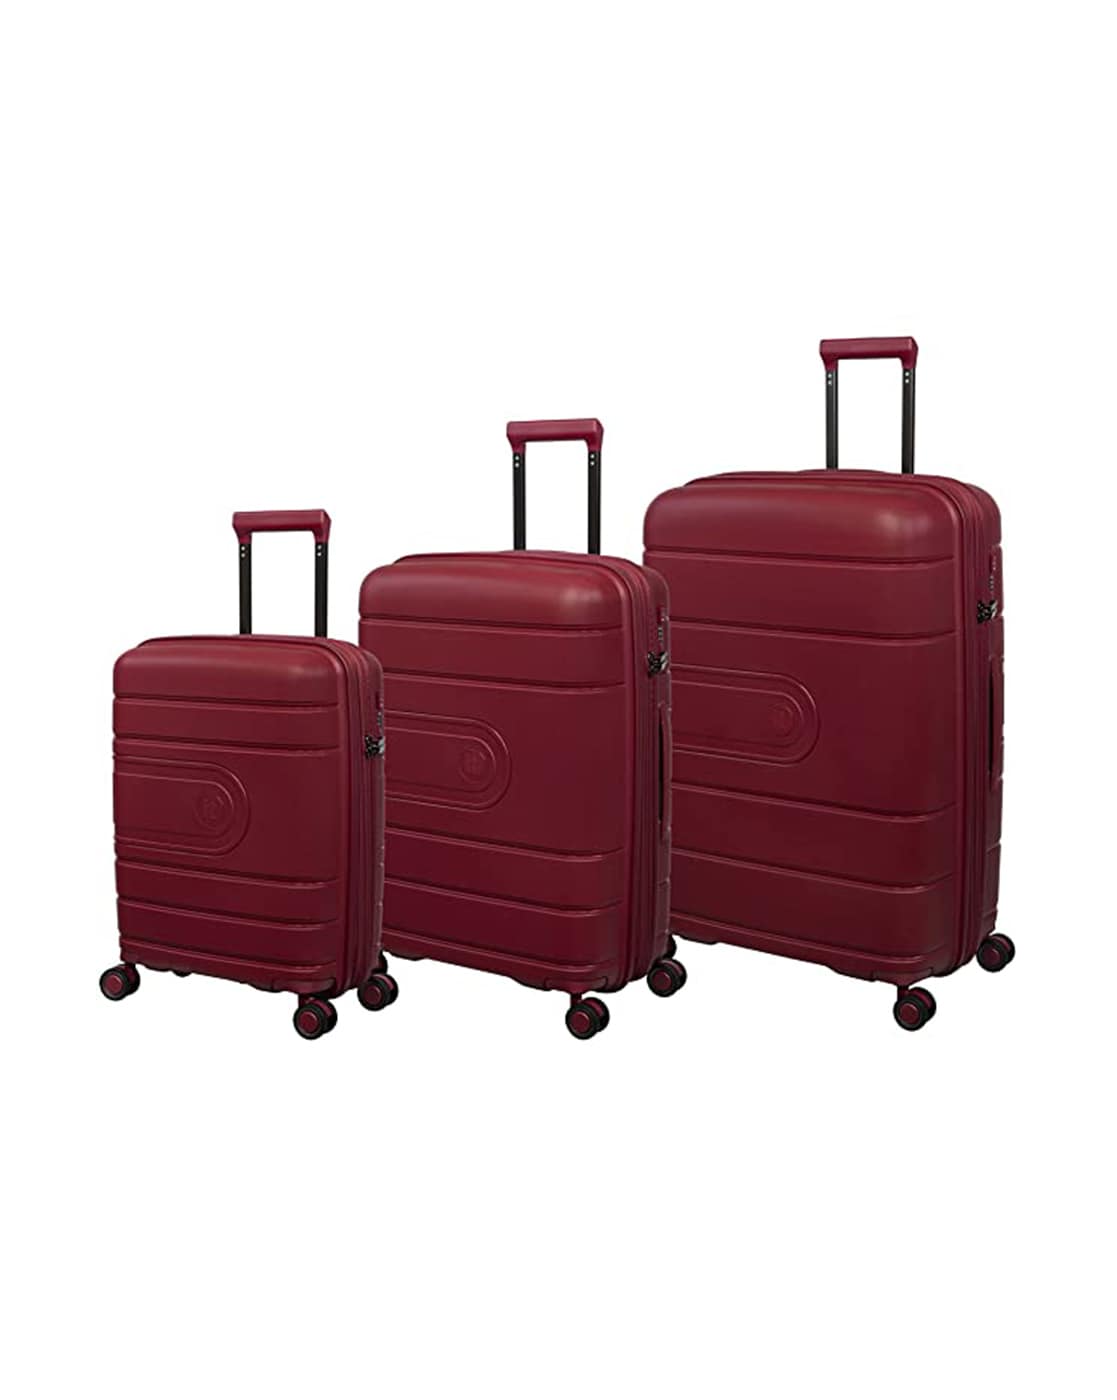 3 Piece Luggage Set, Travelhouse Hardside Suitcase Set with TSA Lock,  Multi-Size Hardside Luggage with Spinner Wheels for Travel Trips Business,  Gray（20